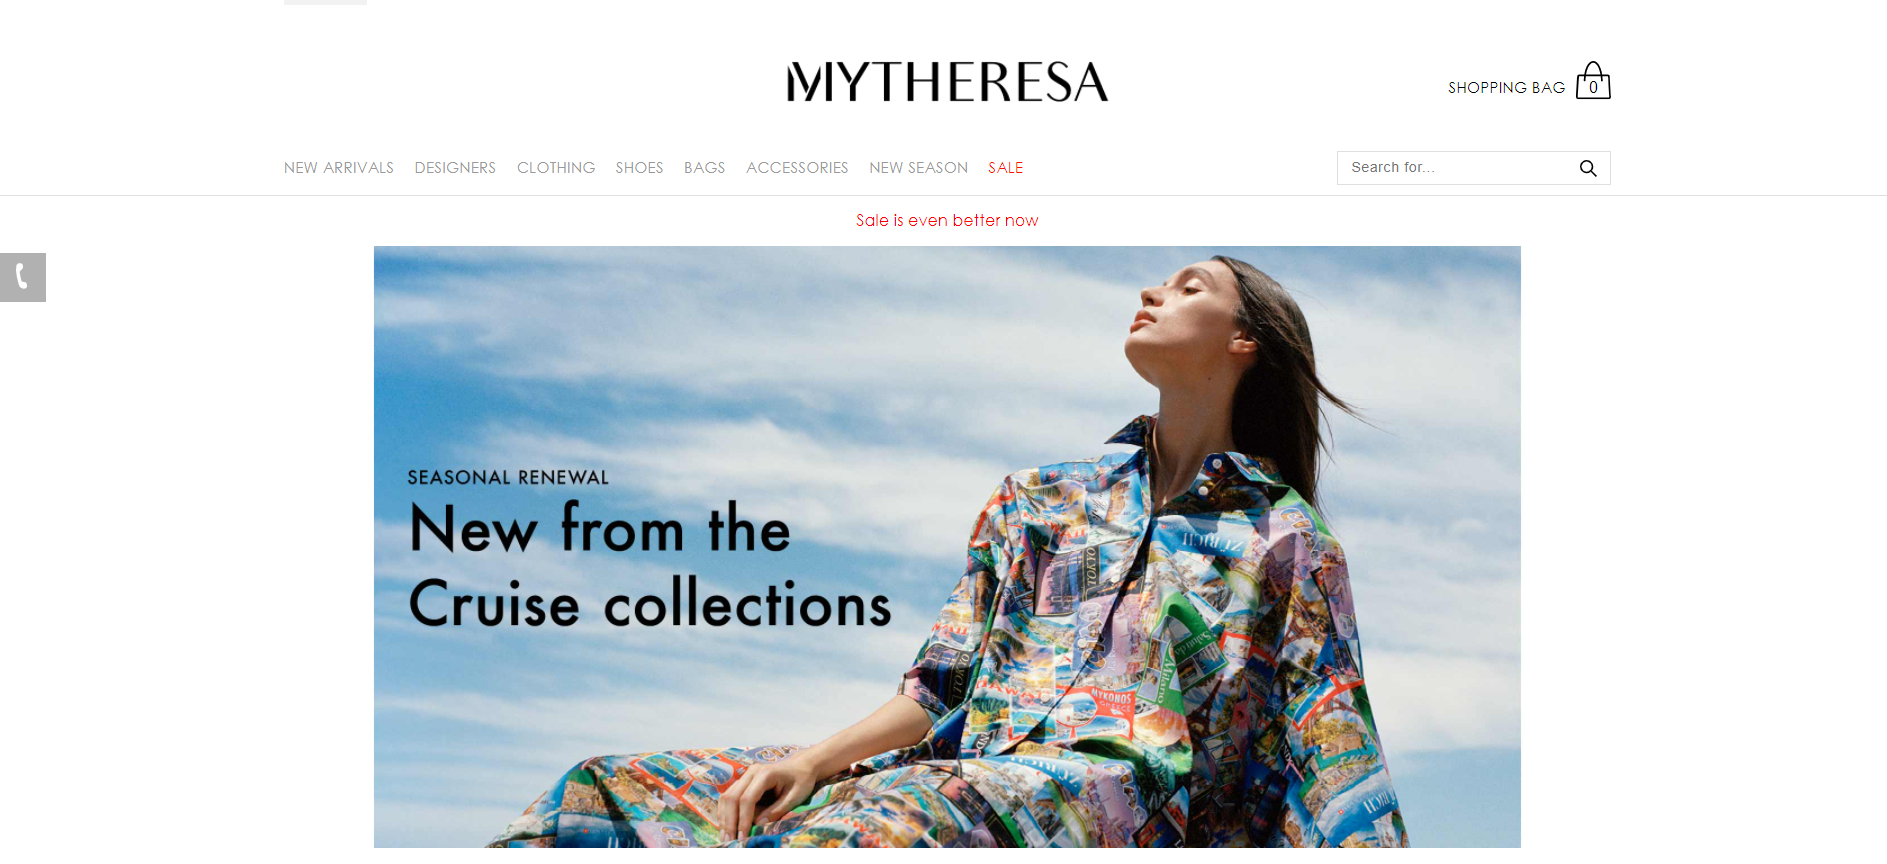 MyTheresa website homepage